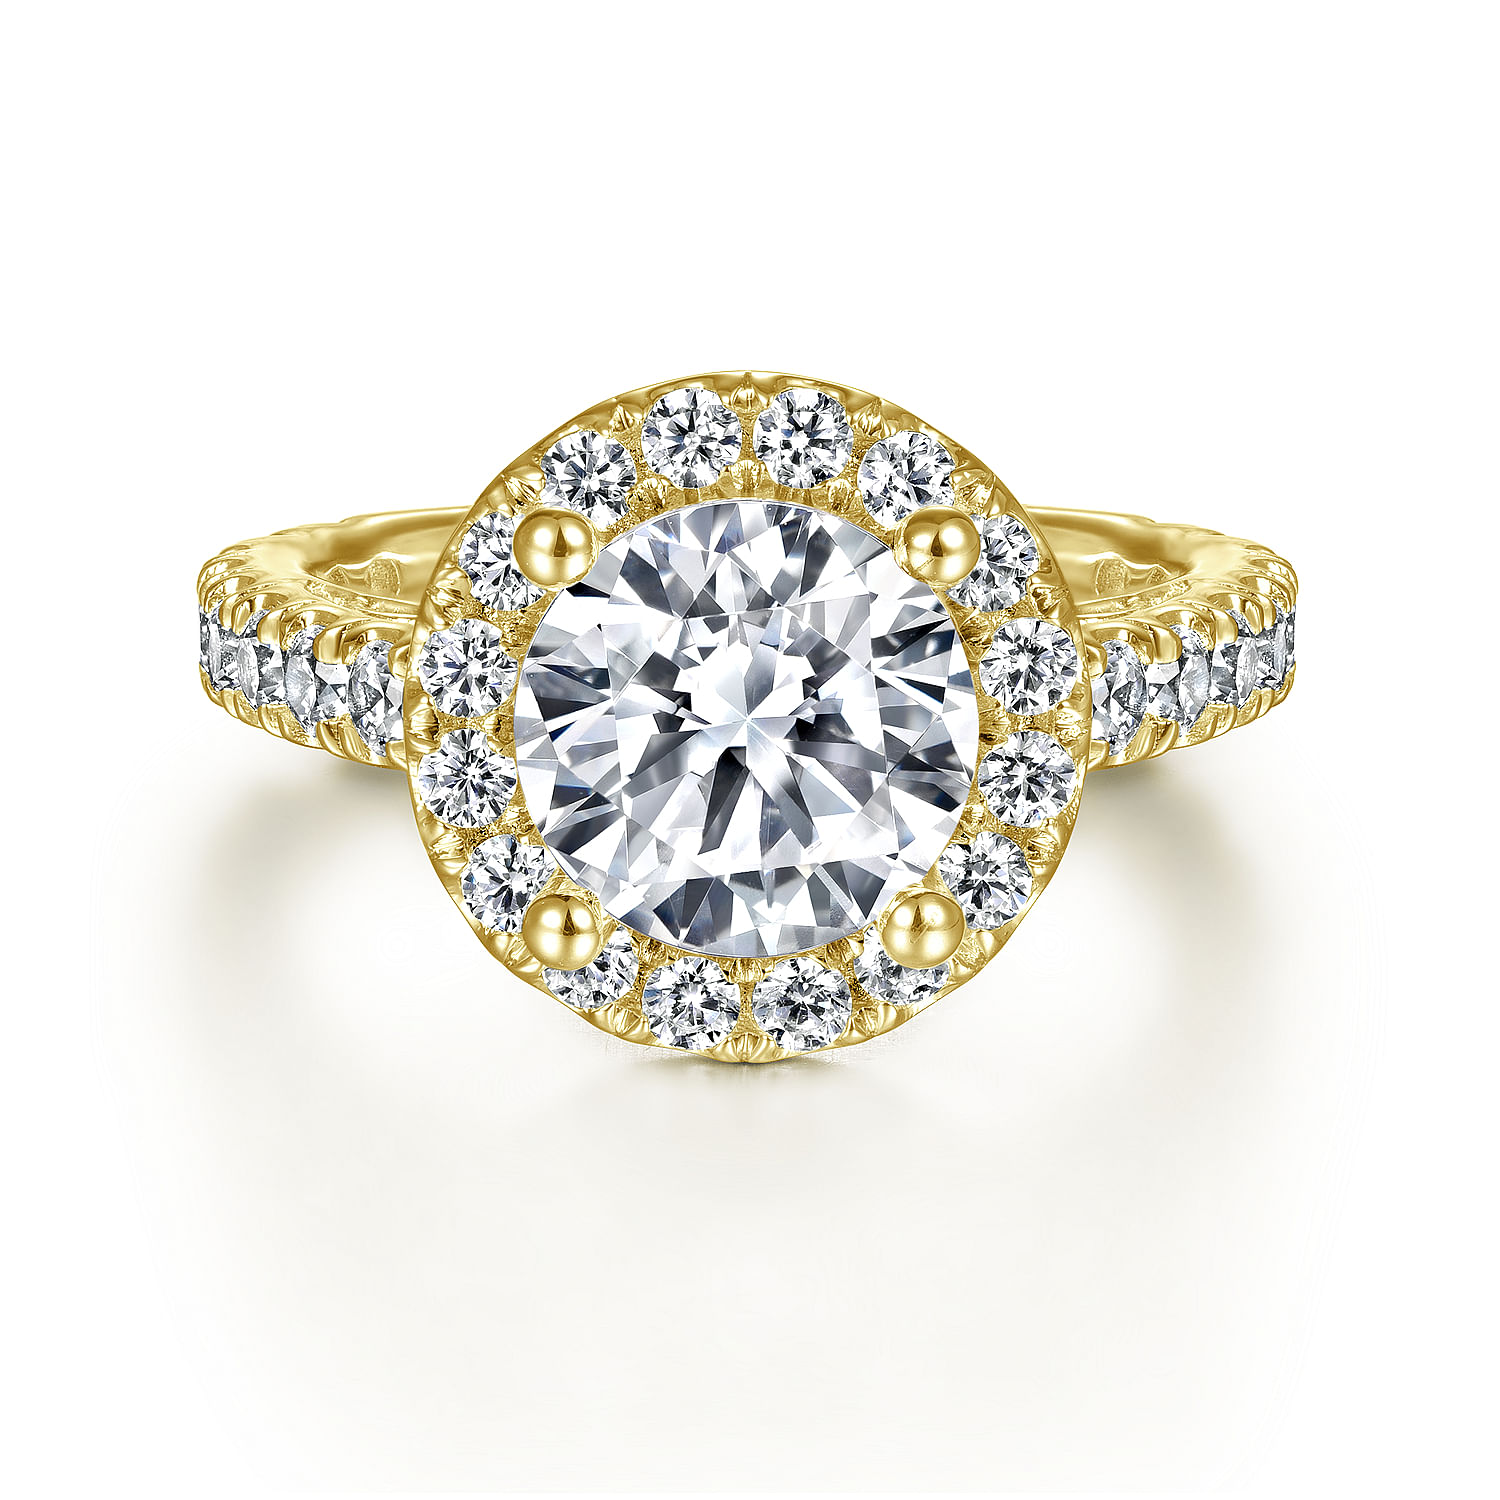 Gabriel - 14K Yellow Gold Round Halo Diamond Engagement Ring